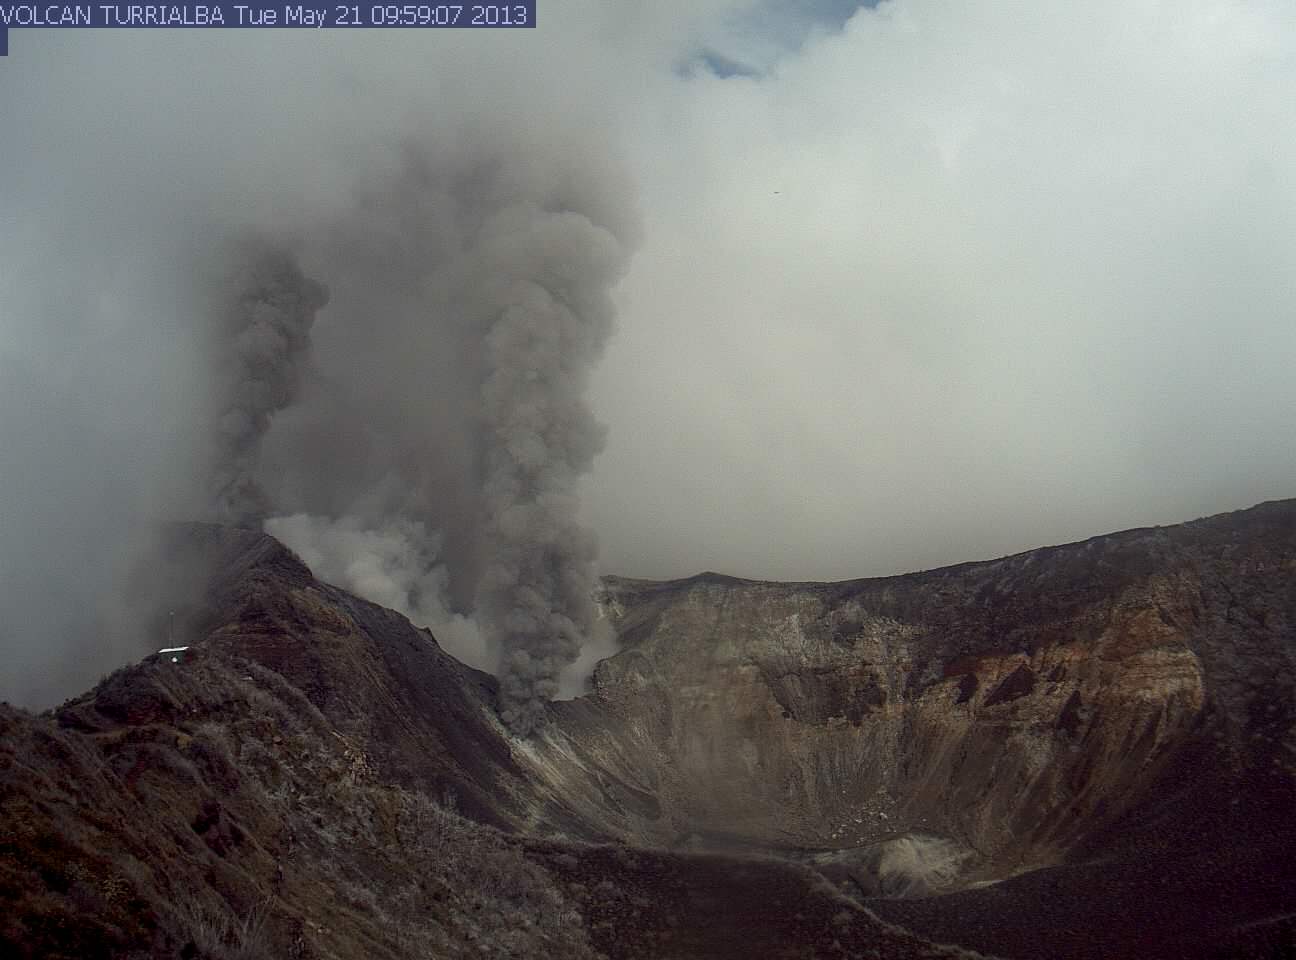 Ash emissions from Turrialba volcano (OVSICORI webcam)